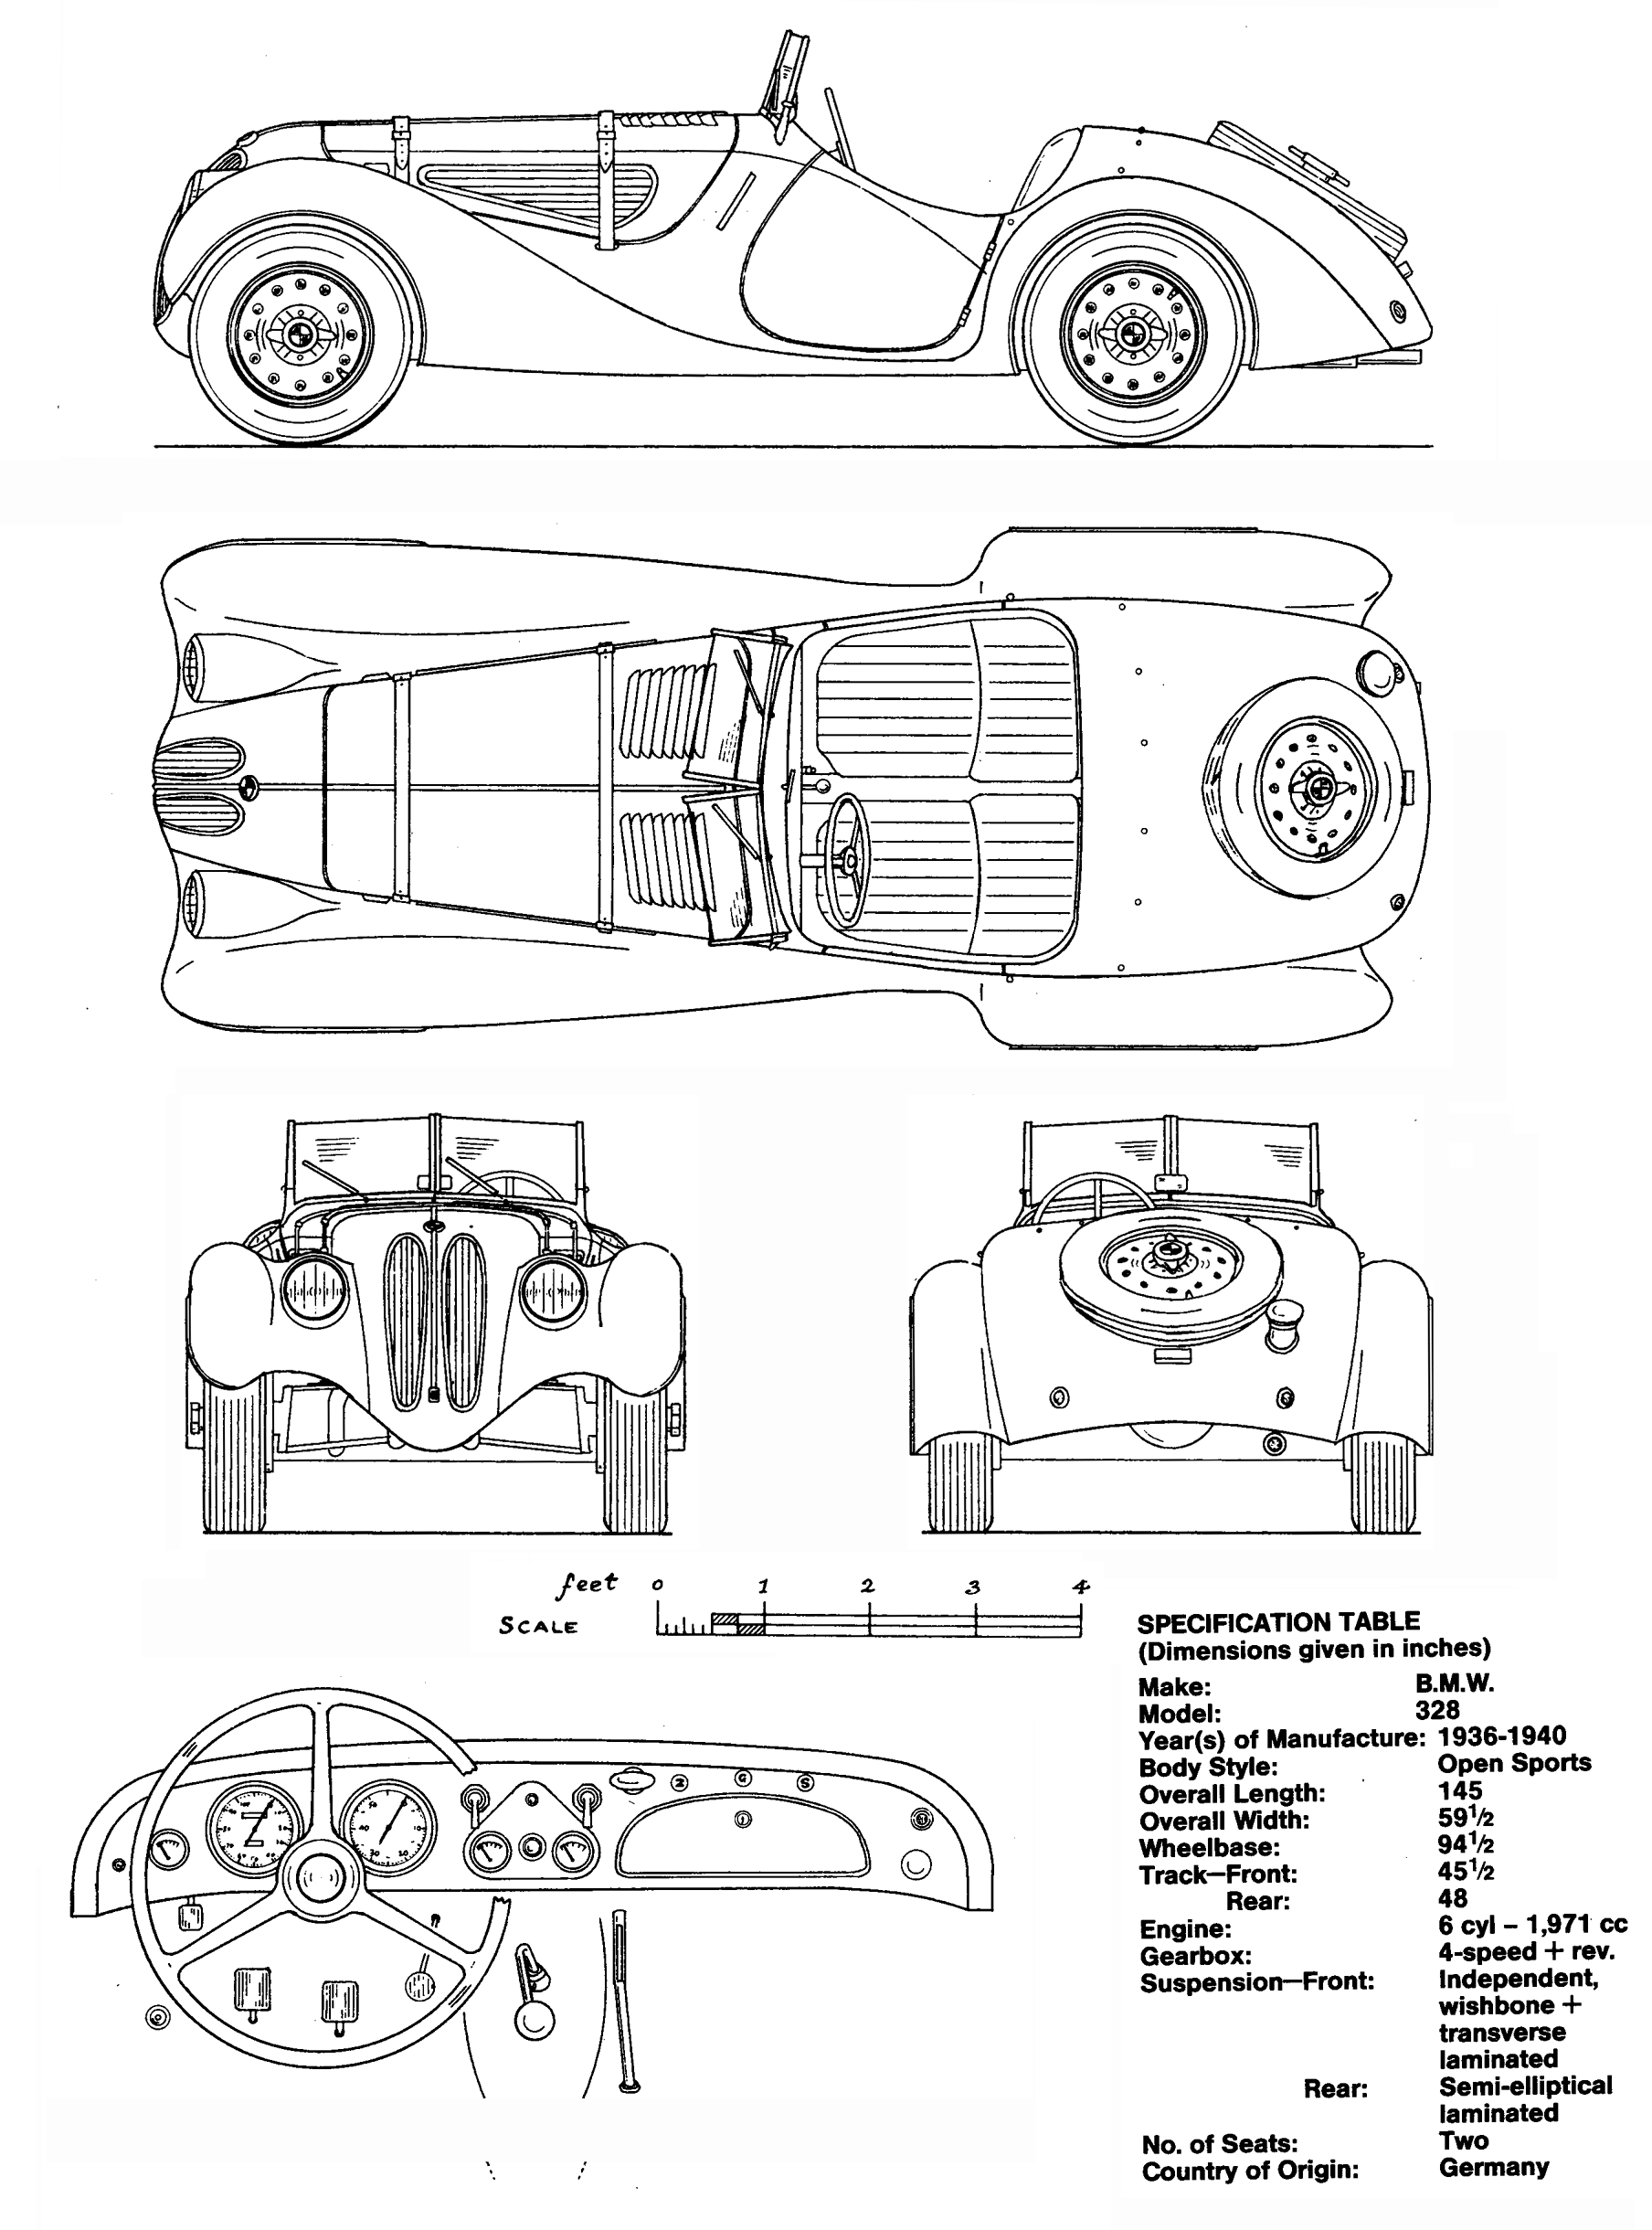 BMW 328 blueprint